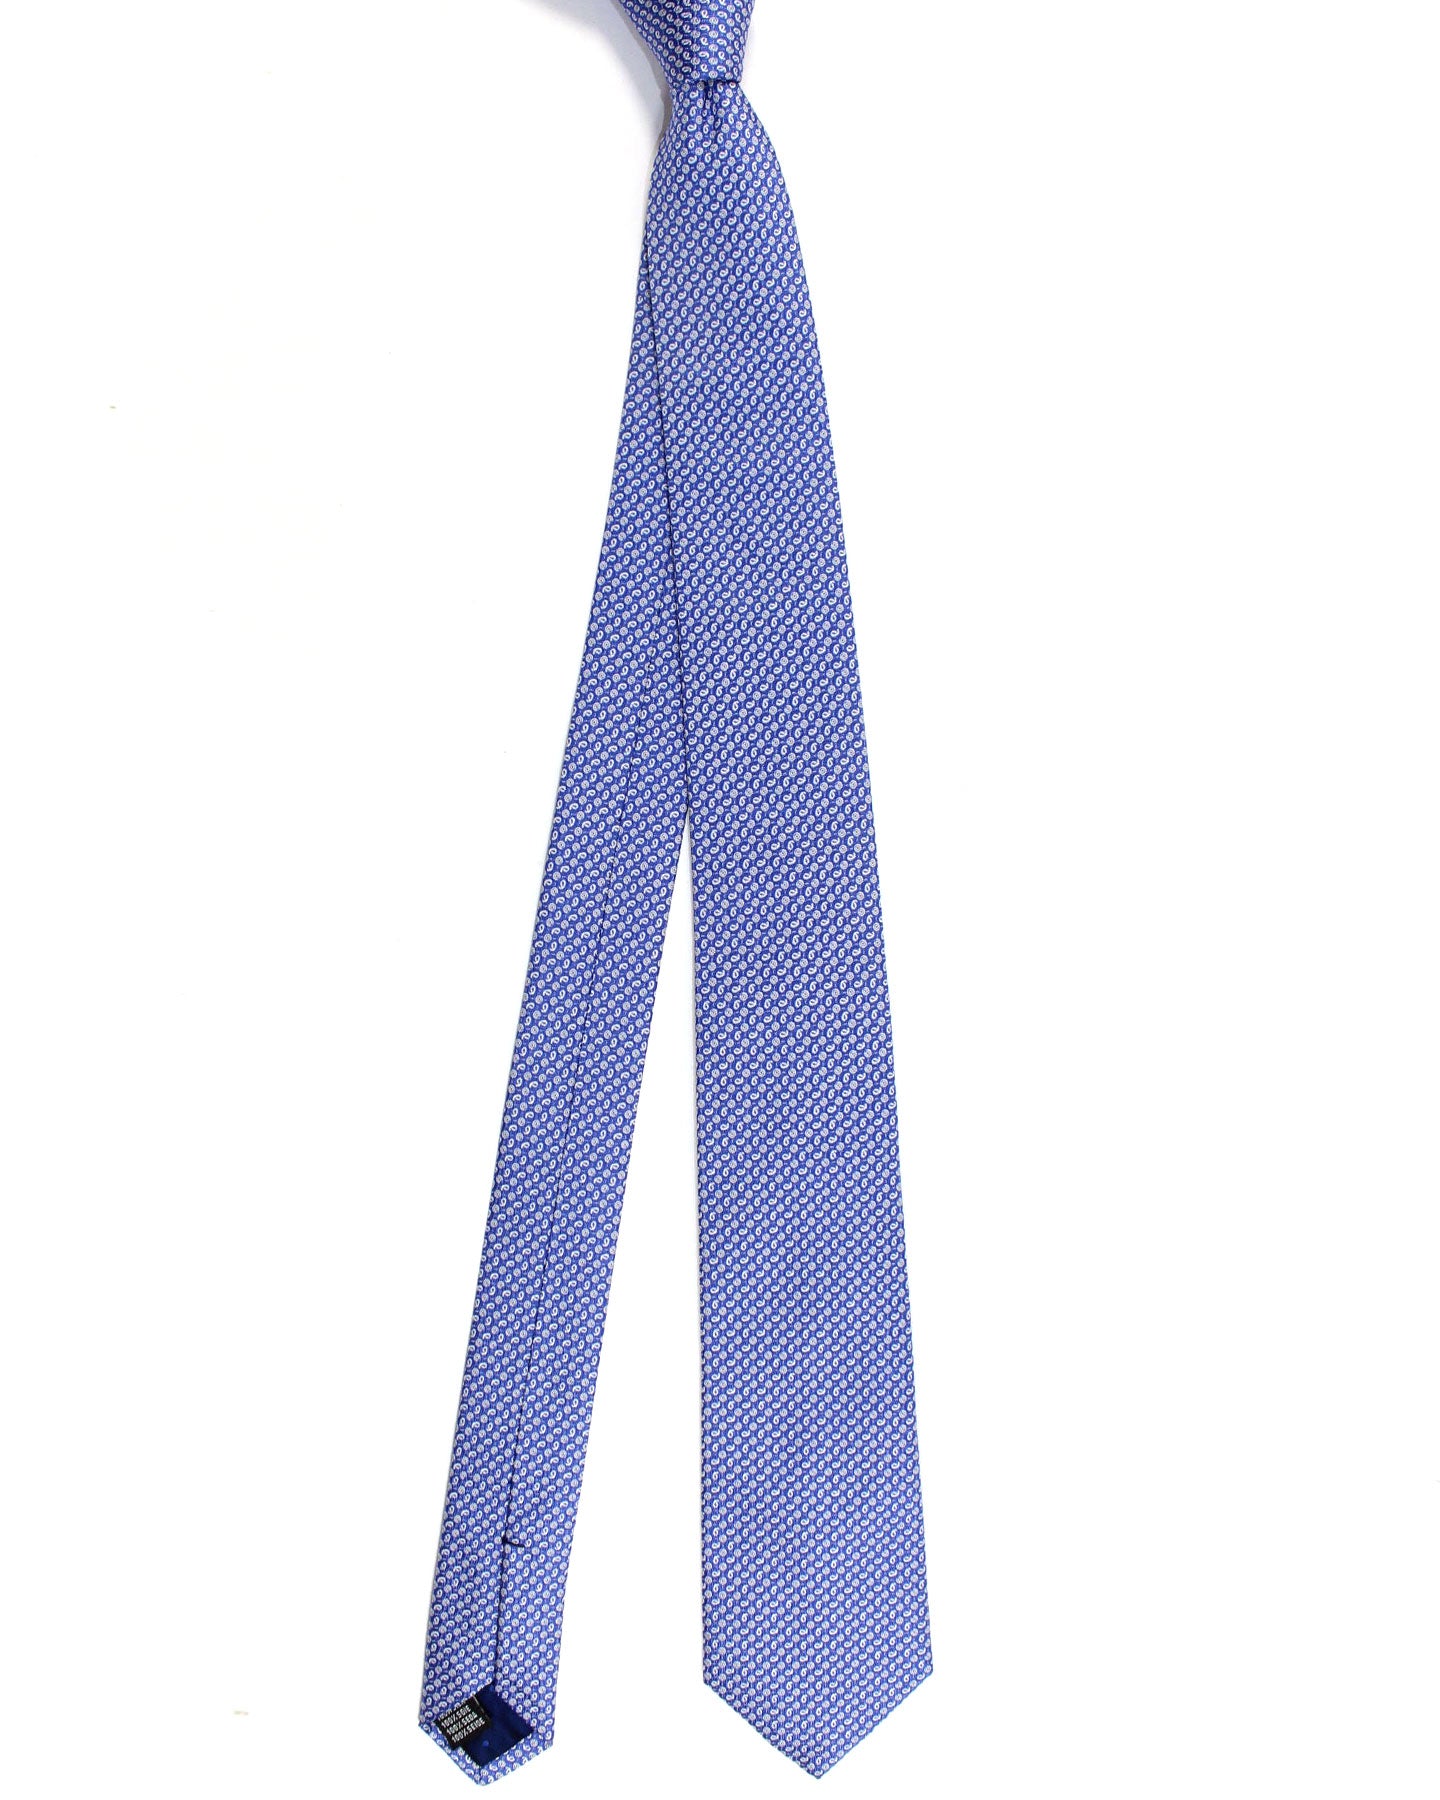 Ungaro Silk Tie Royal Blue Geometric - Narrow Cut Designer Necktie